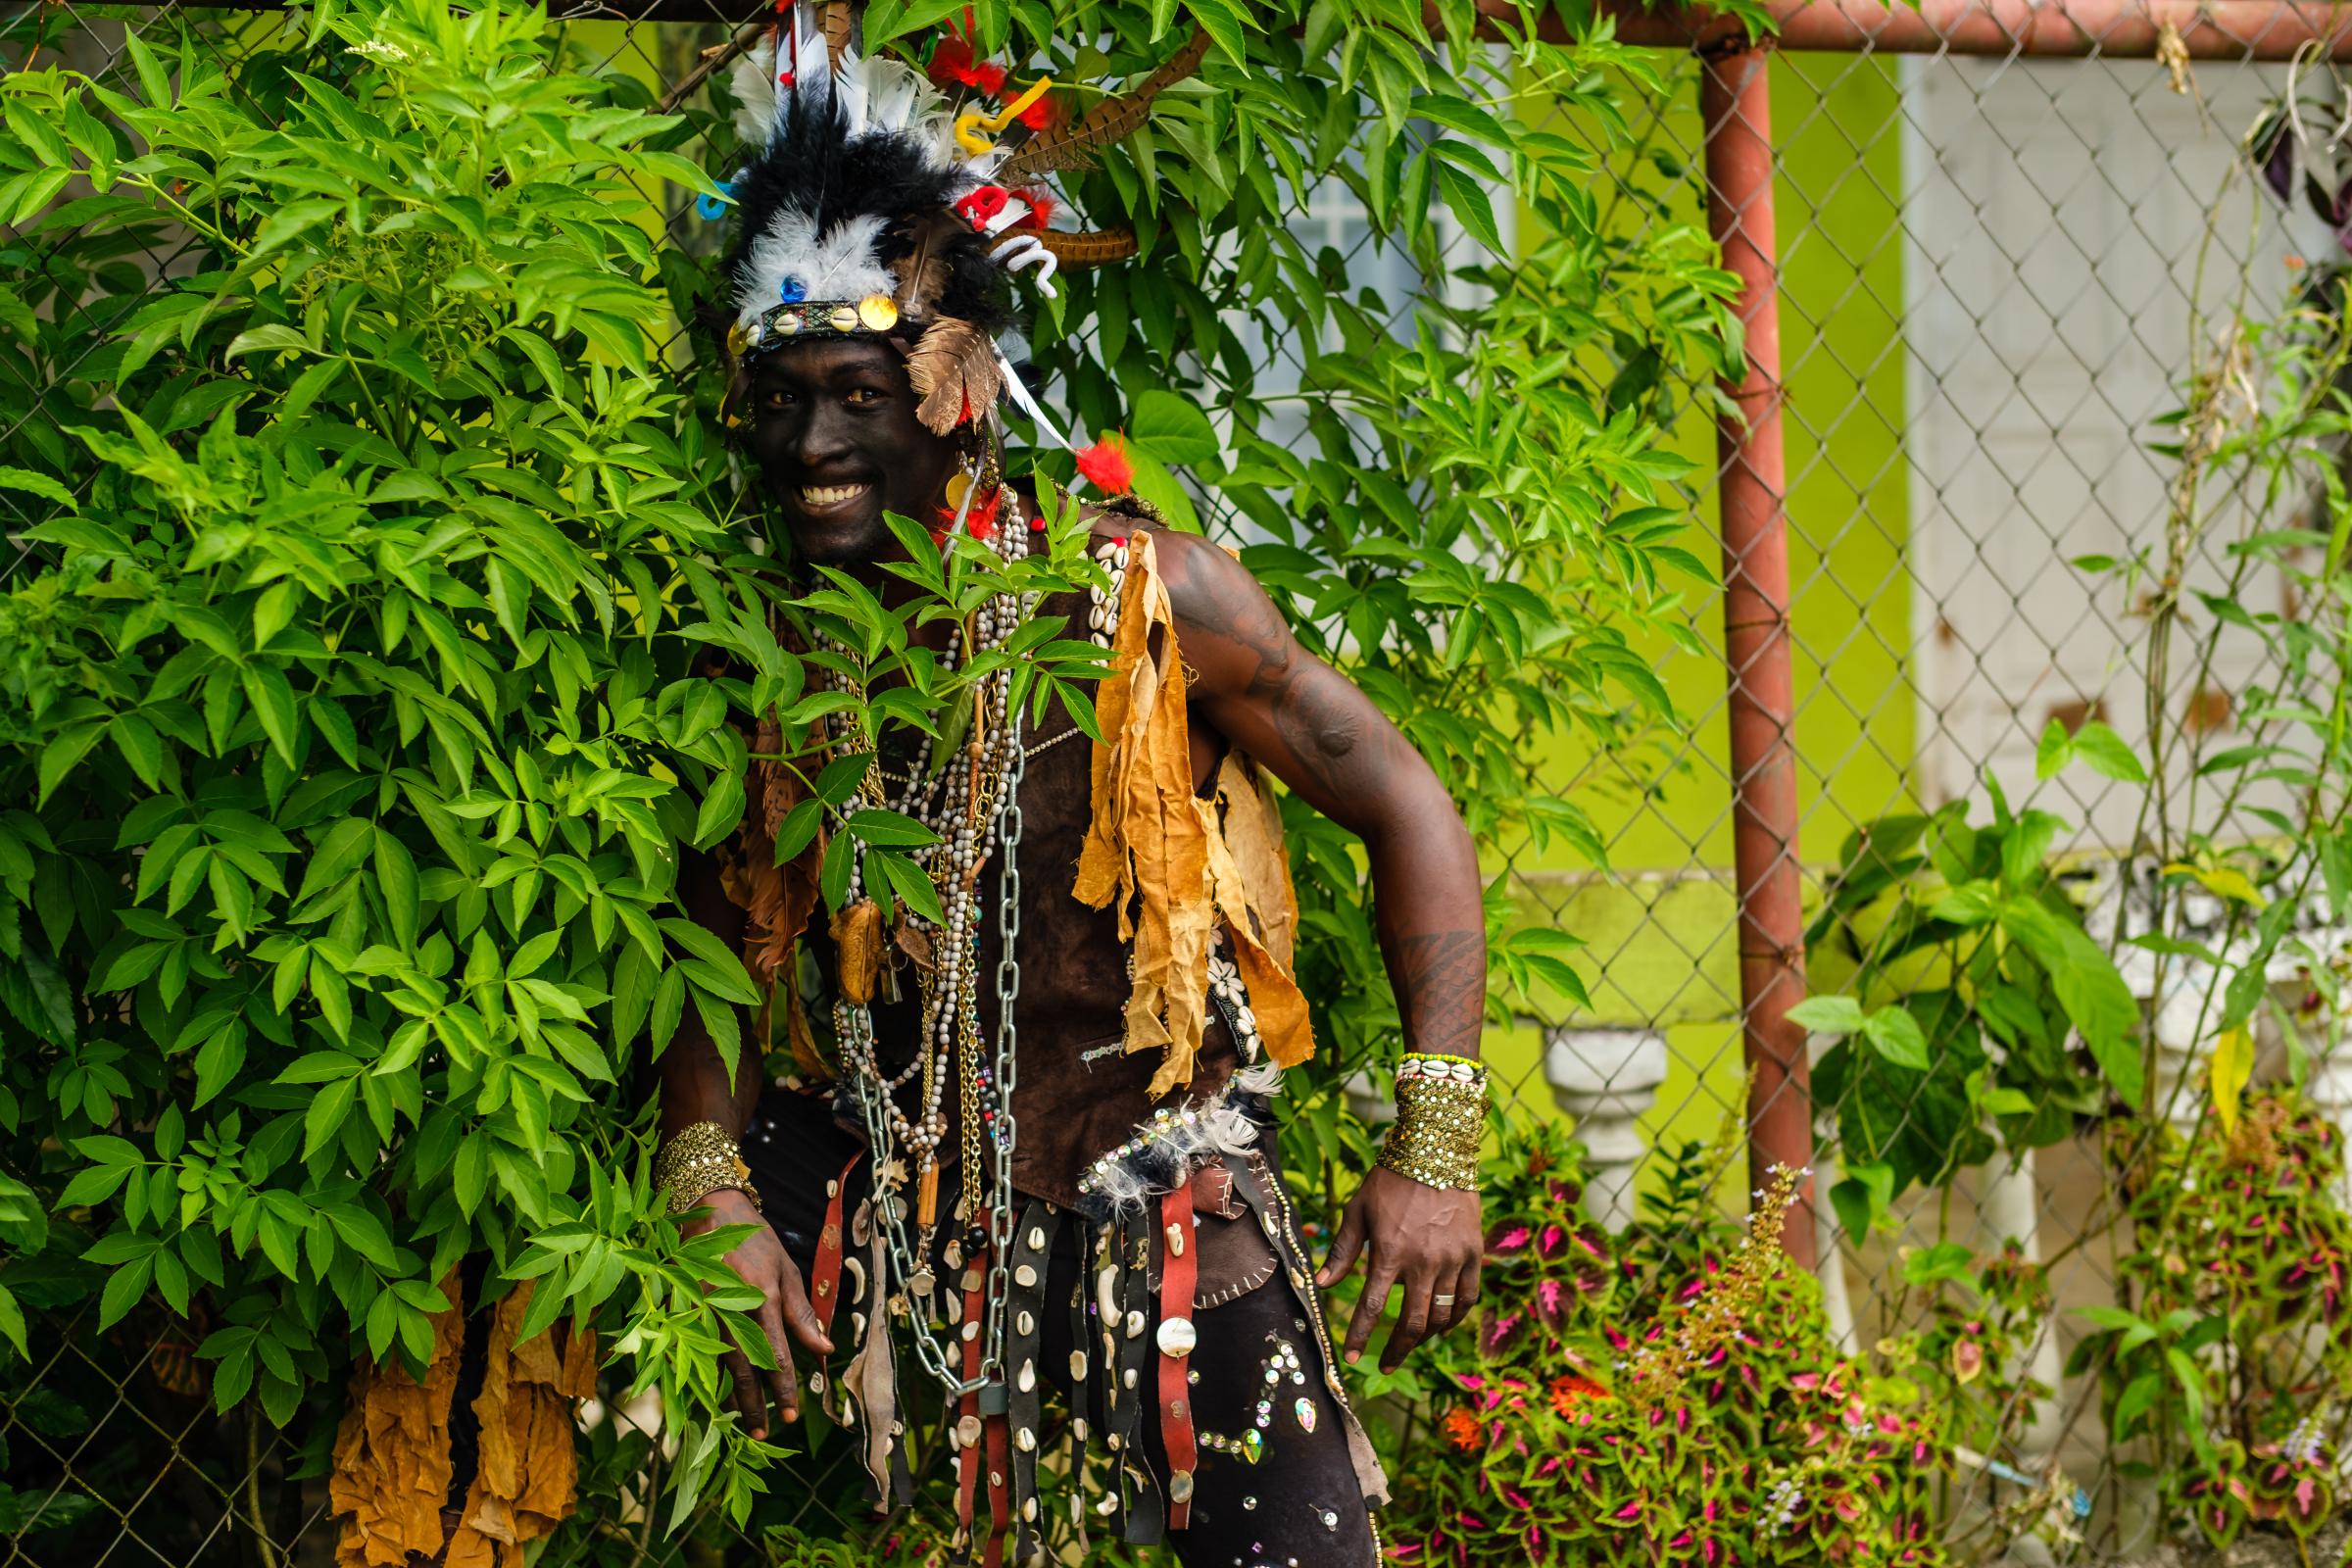 Congo Culture, Portobelo, Panama - Nelson, dressing and posing as a Congo. Congo traditions...